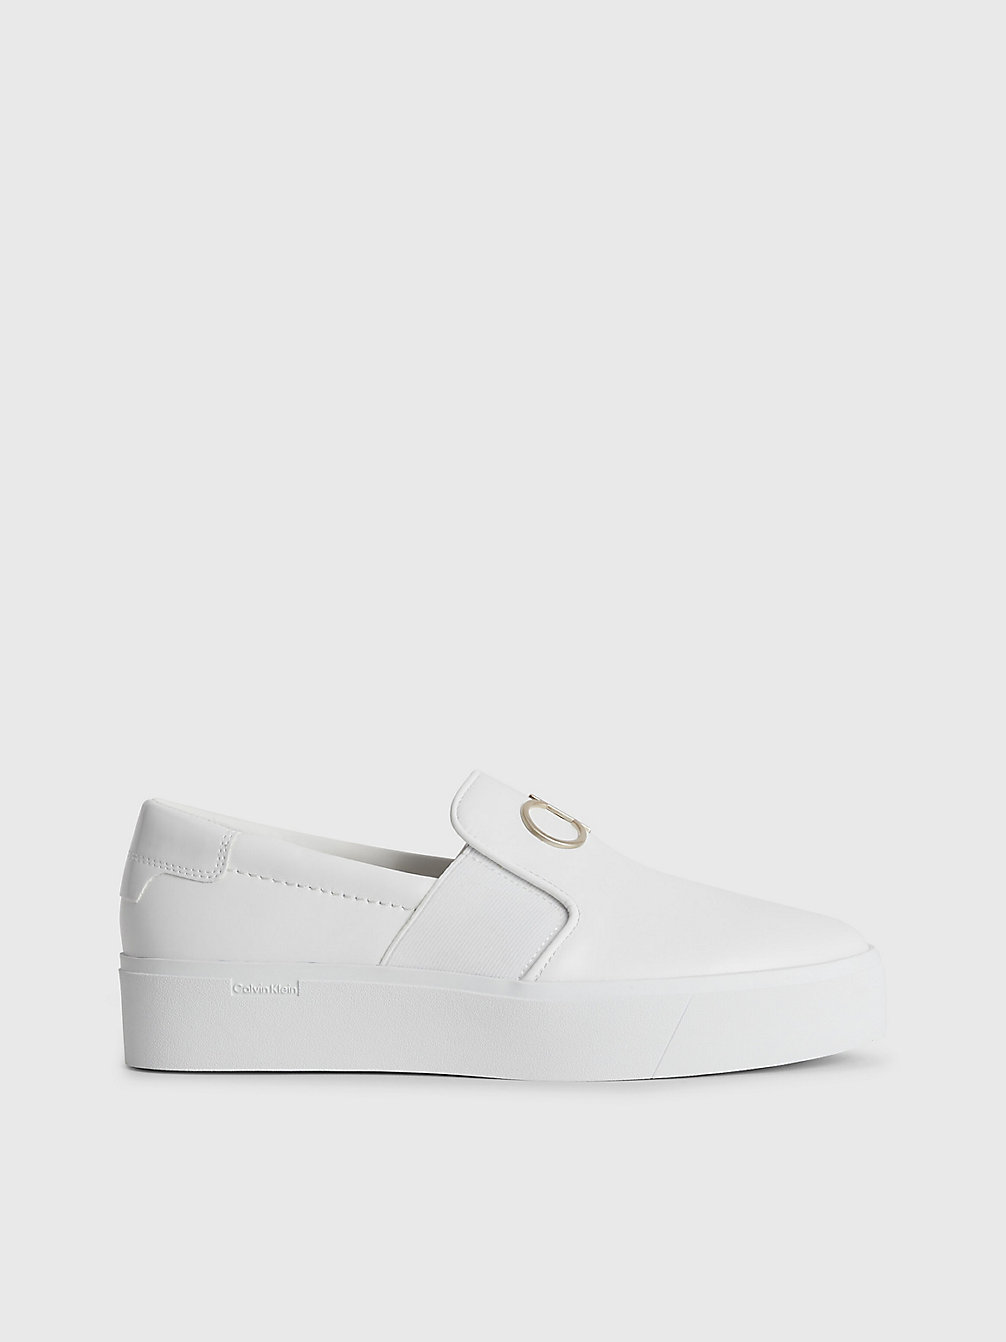 BRIGHT WHITE Leather Platform Slip-On Shoes undefined women Calvin Klein